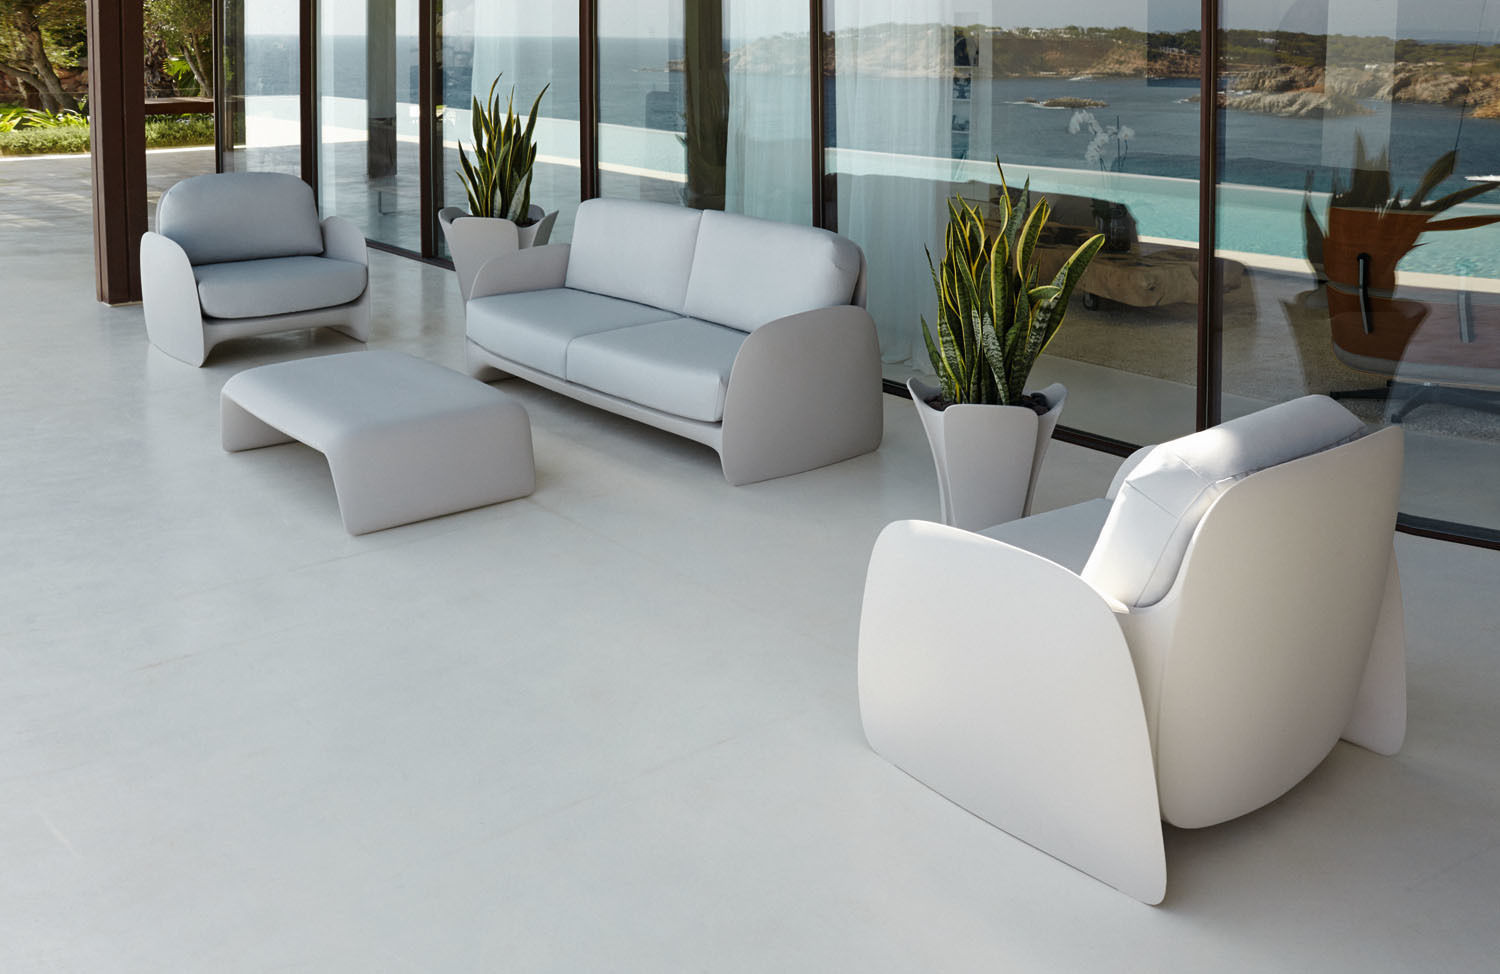 Muebles de jardín para la temporada 2015, Ociohogar Ociohogar Modern style gardens Furniture